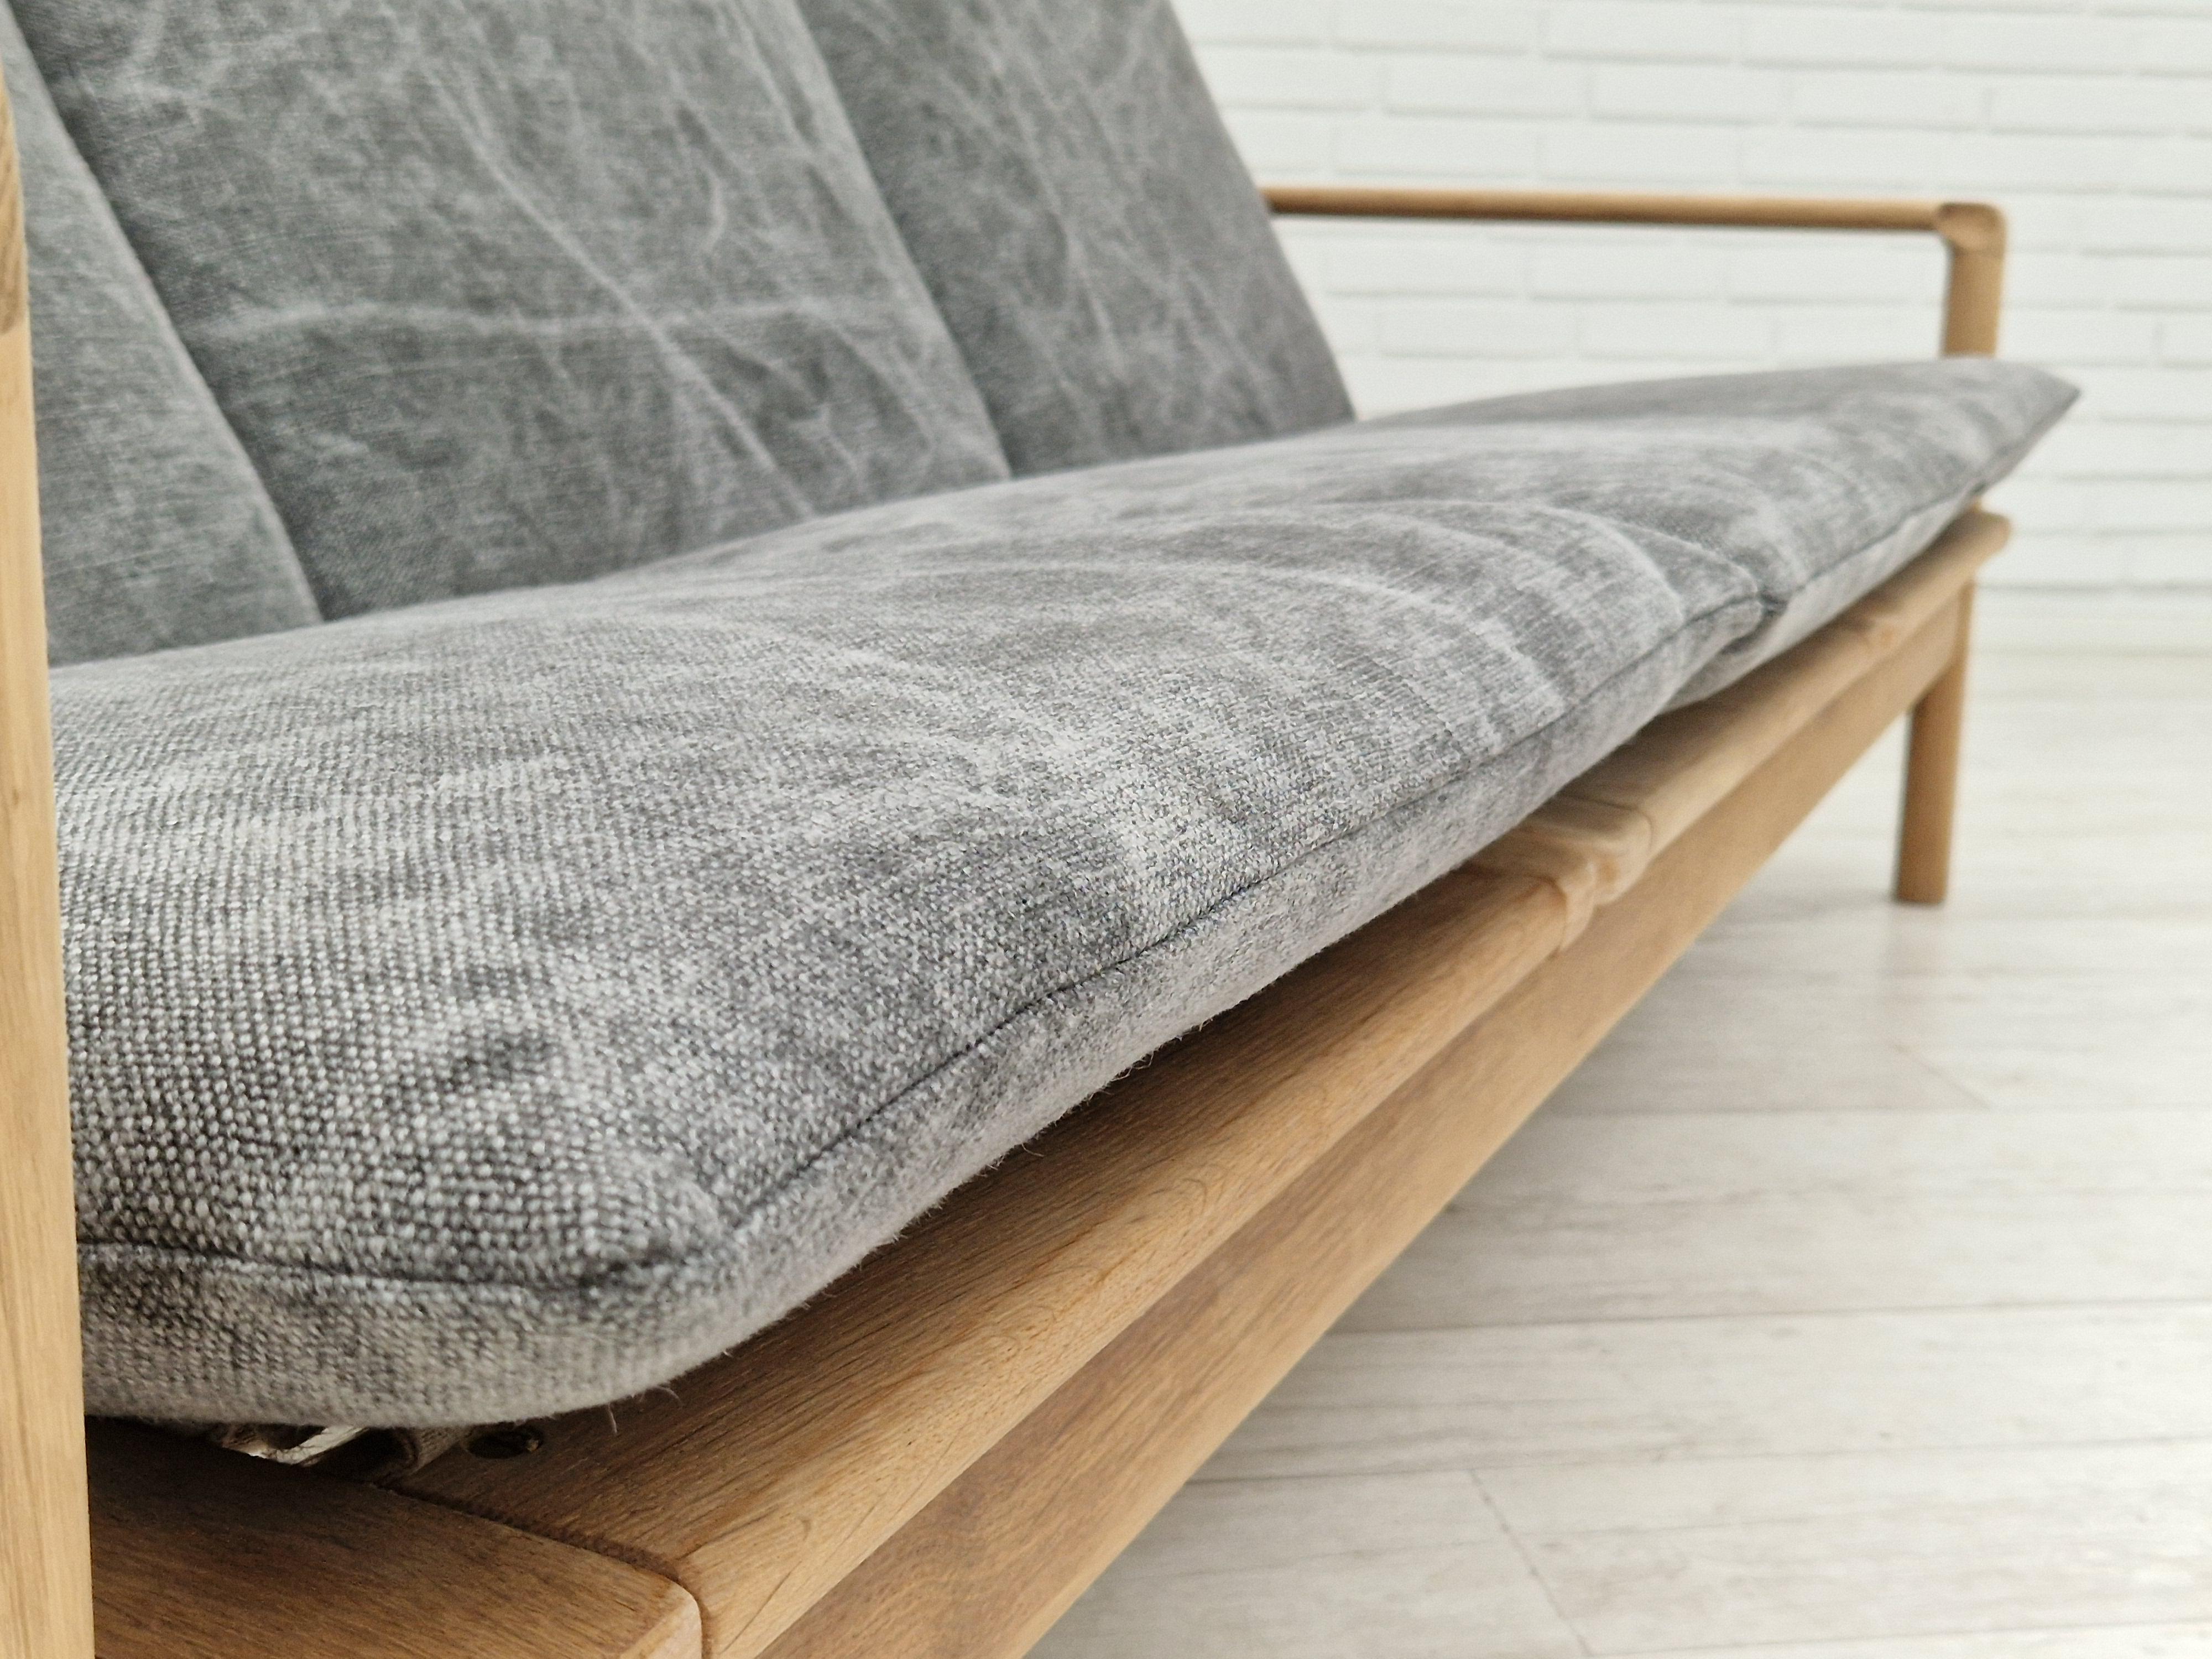 70s, Danish design, renovated 3 seater sofa, linen furniture fabric, oak wood For Sale 9